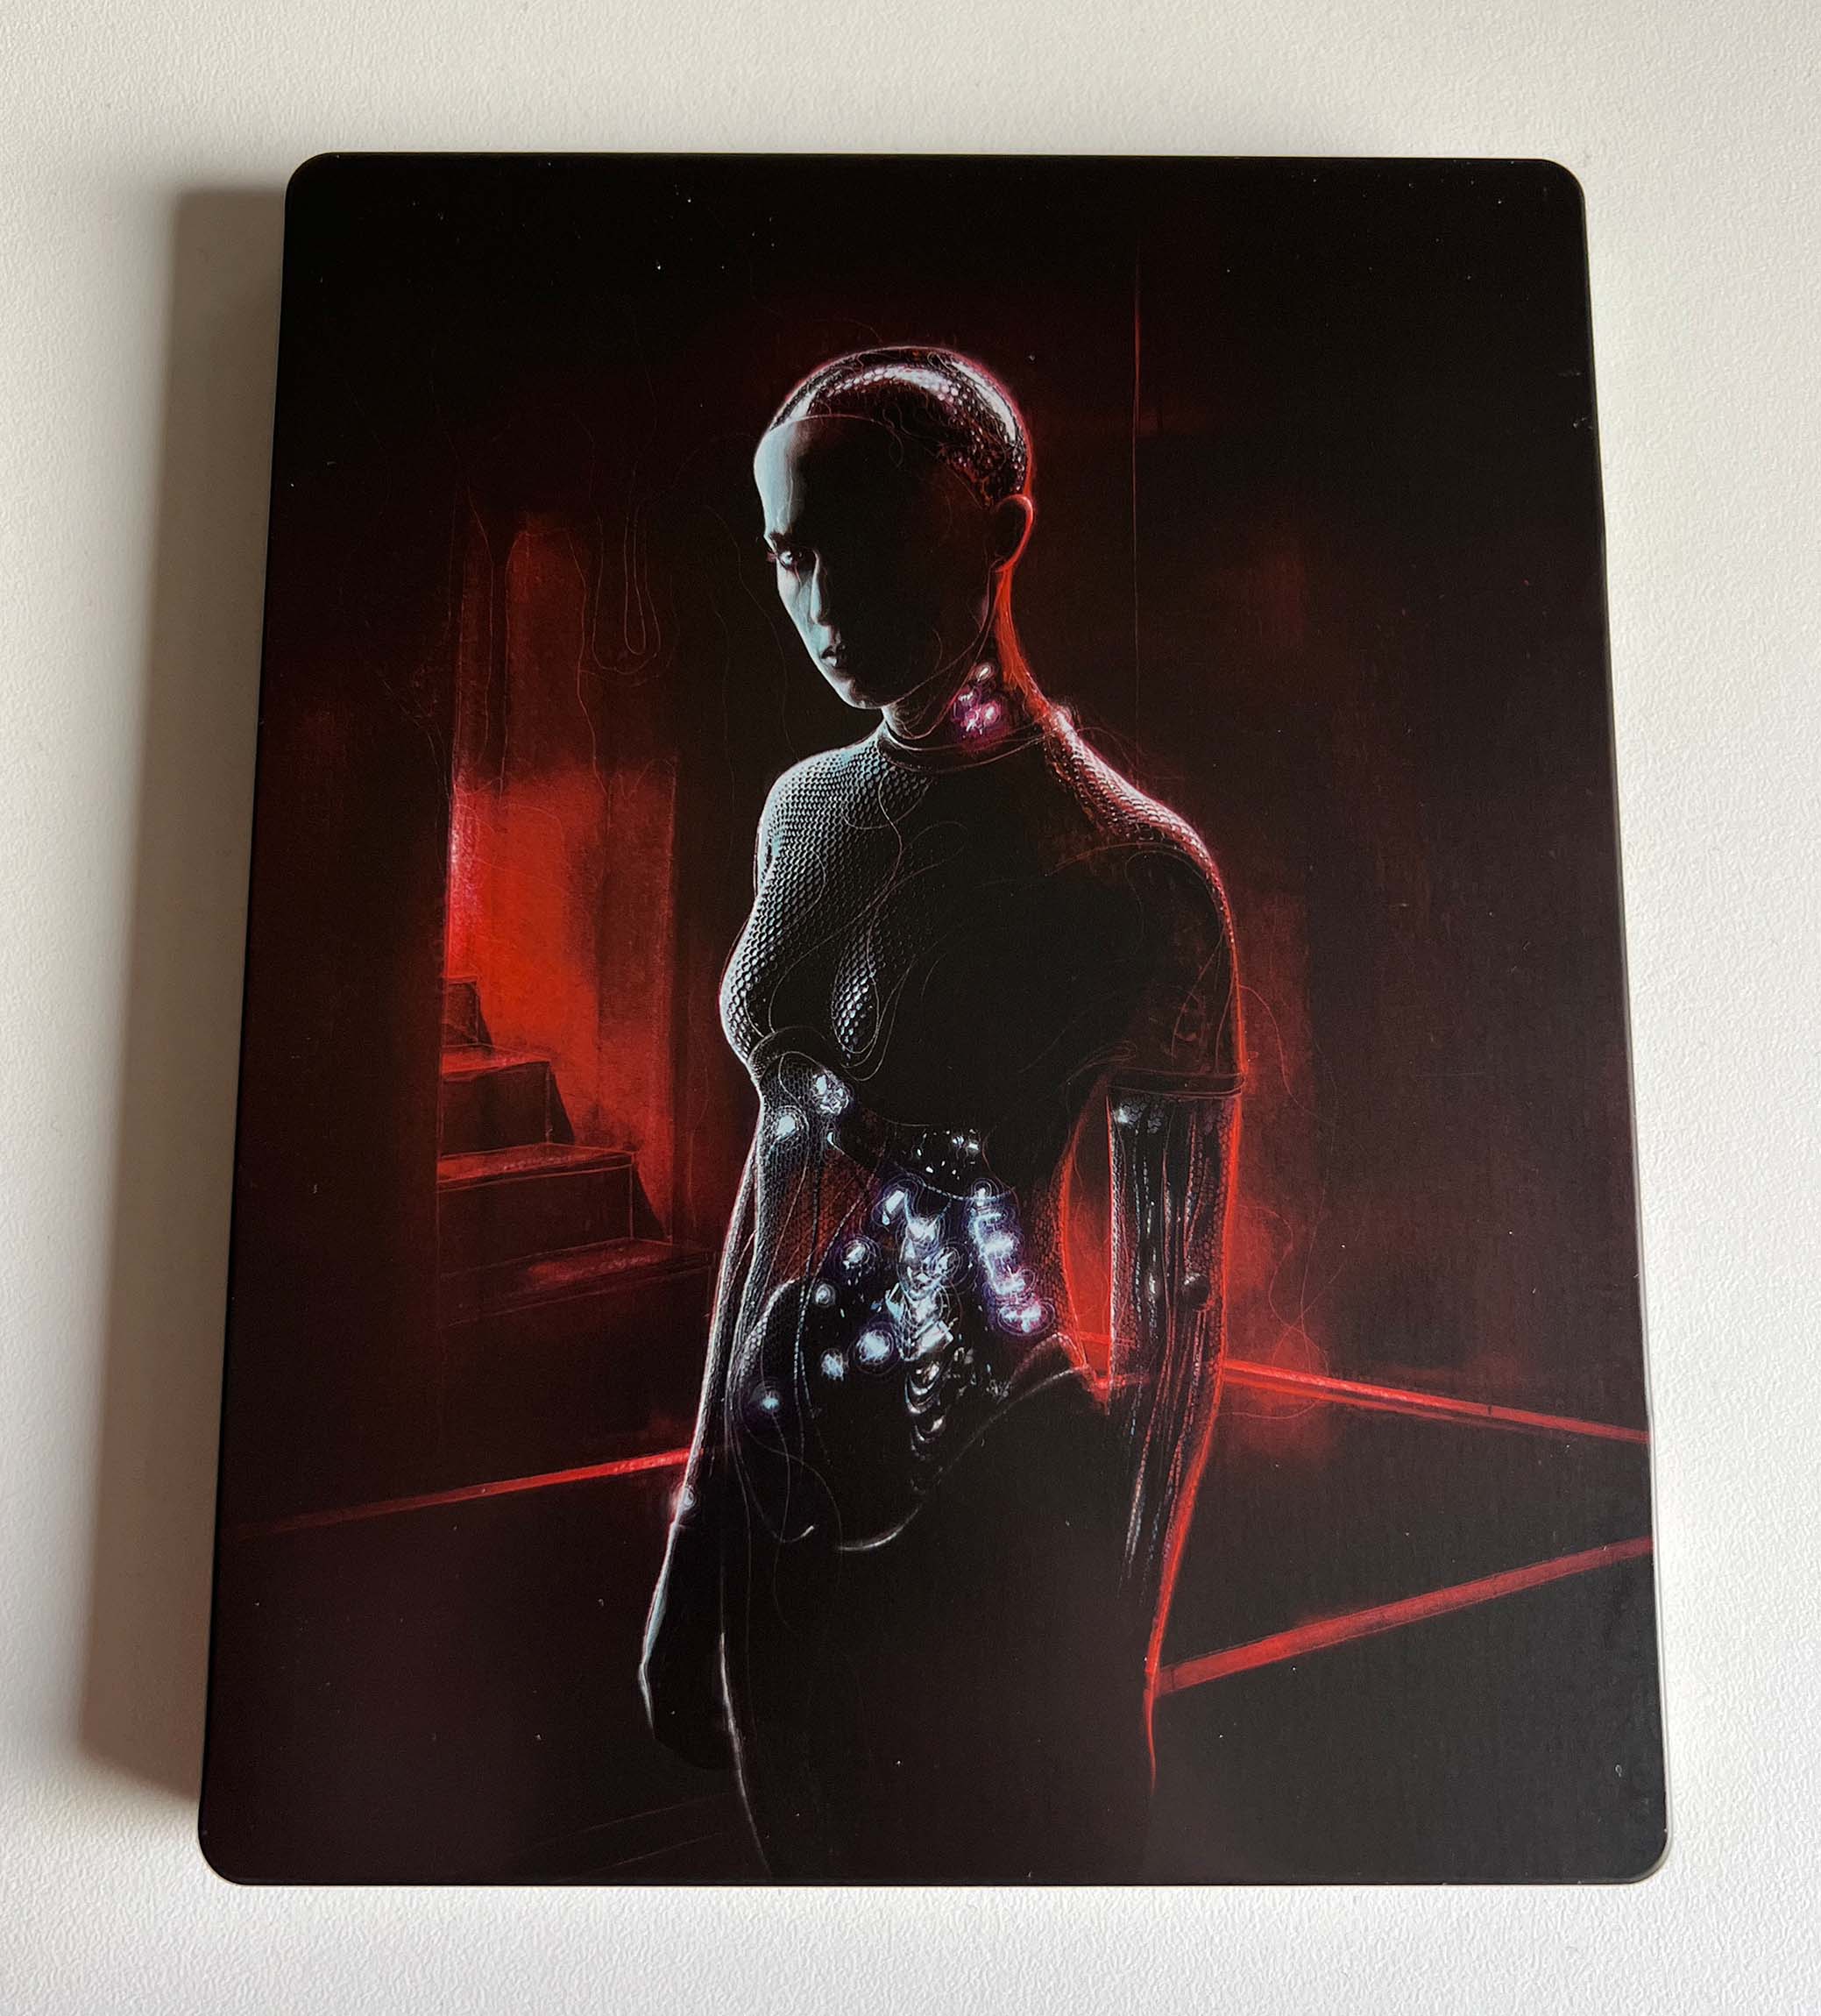 [Review] Ex Machina (4K Ultra HD Blu-Ray & Blu-Ray) Limited Steelbook Edition